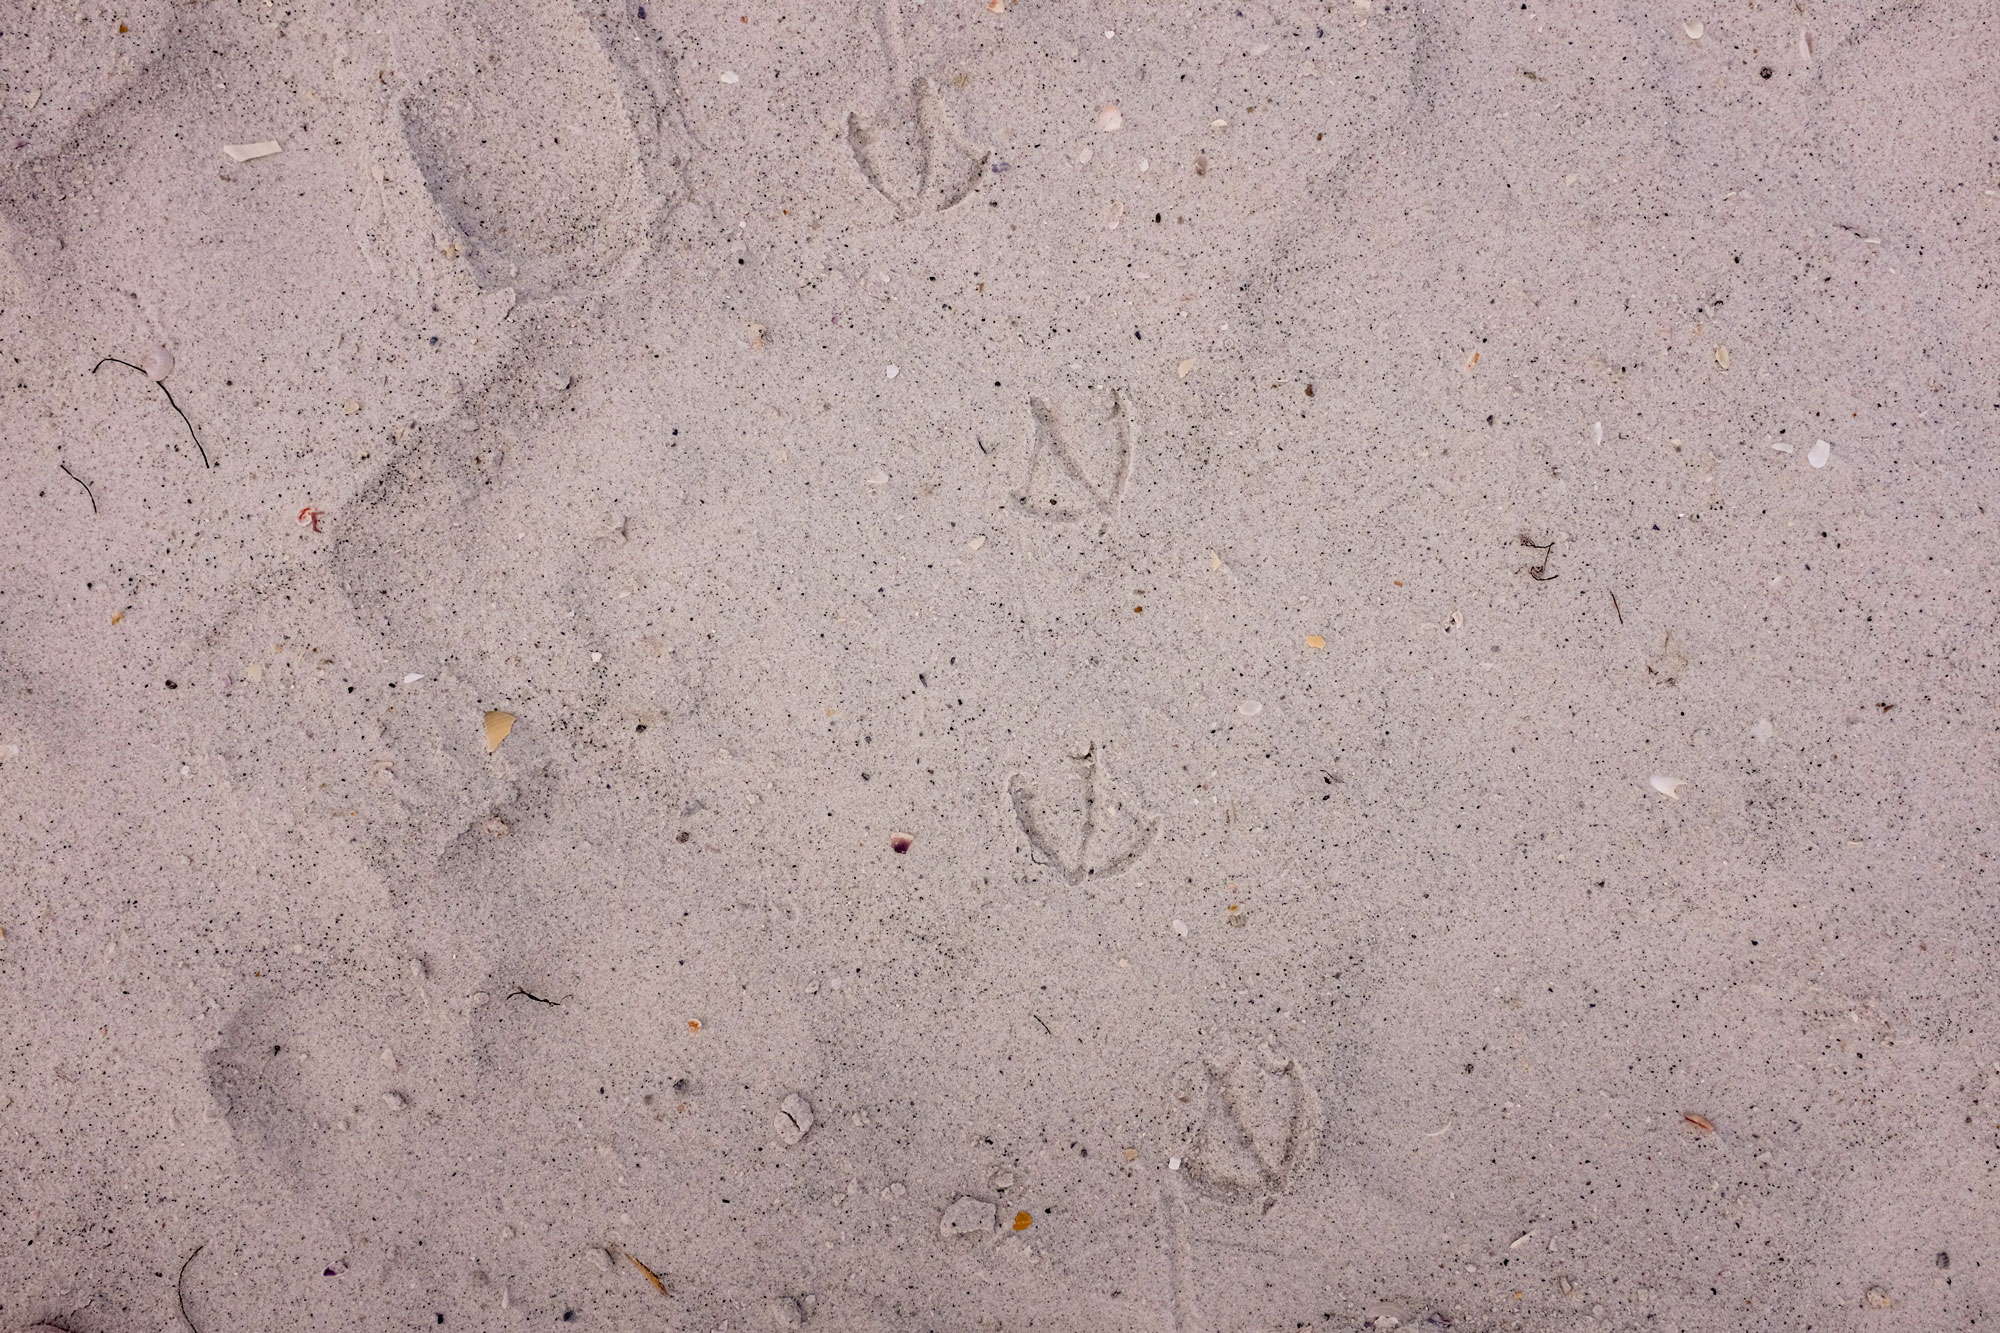 bird footprints in the sand